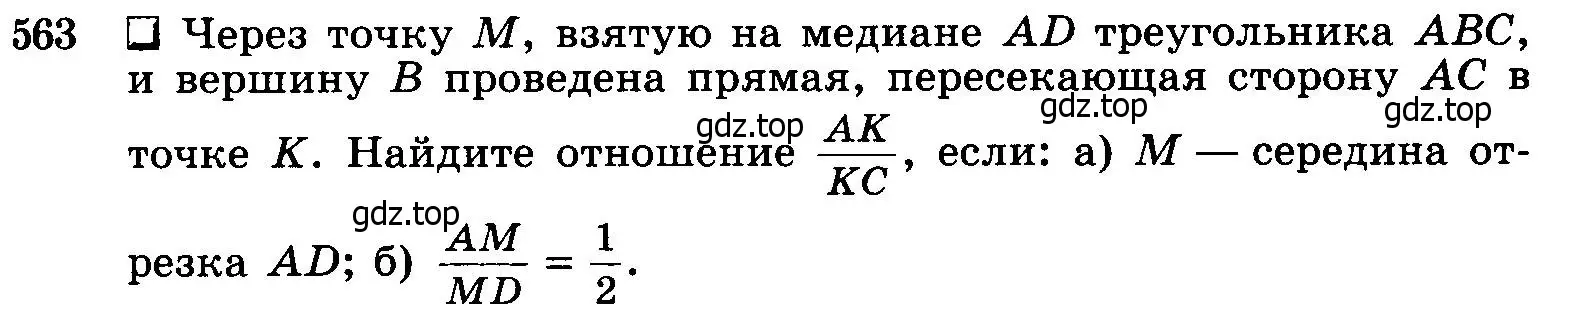 Условие номер 563 (страница 145) гдз по геометрии 7-9 класс Атанасян, Бутузов, учебник